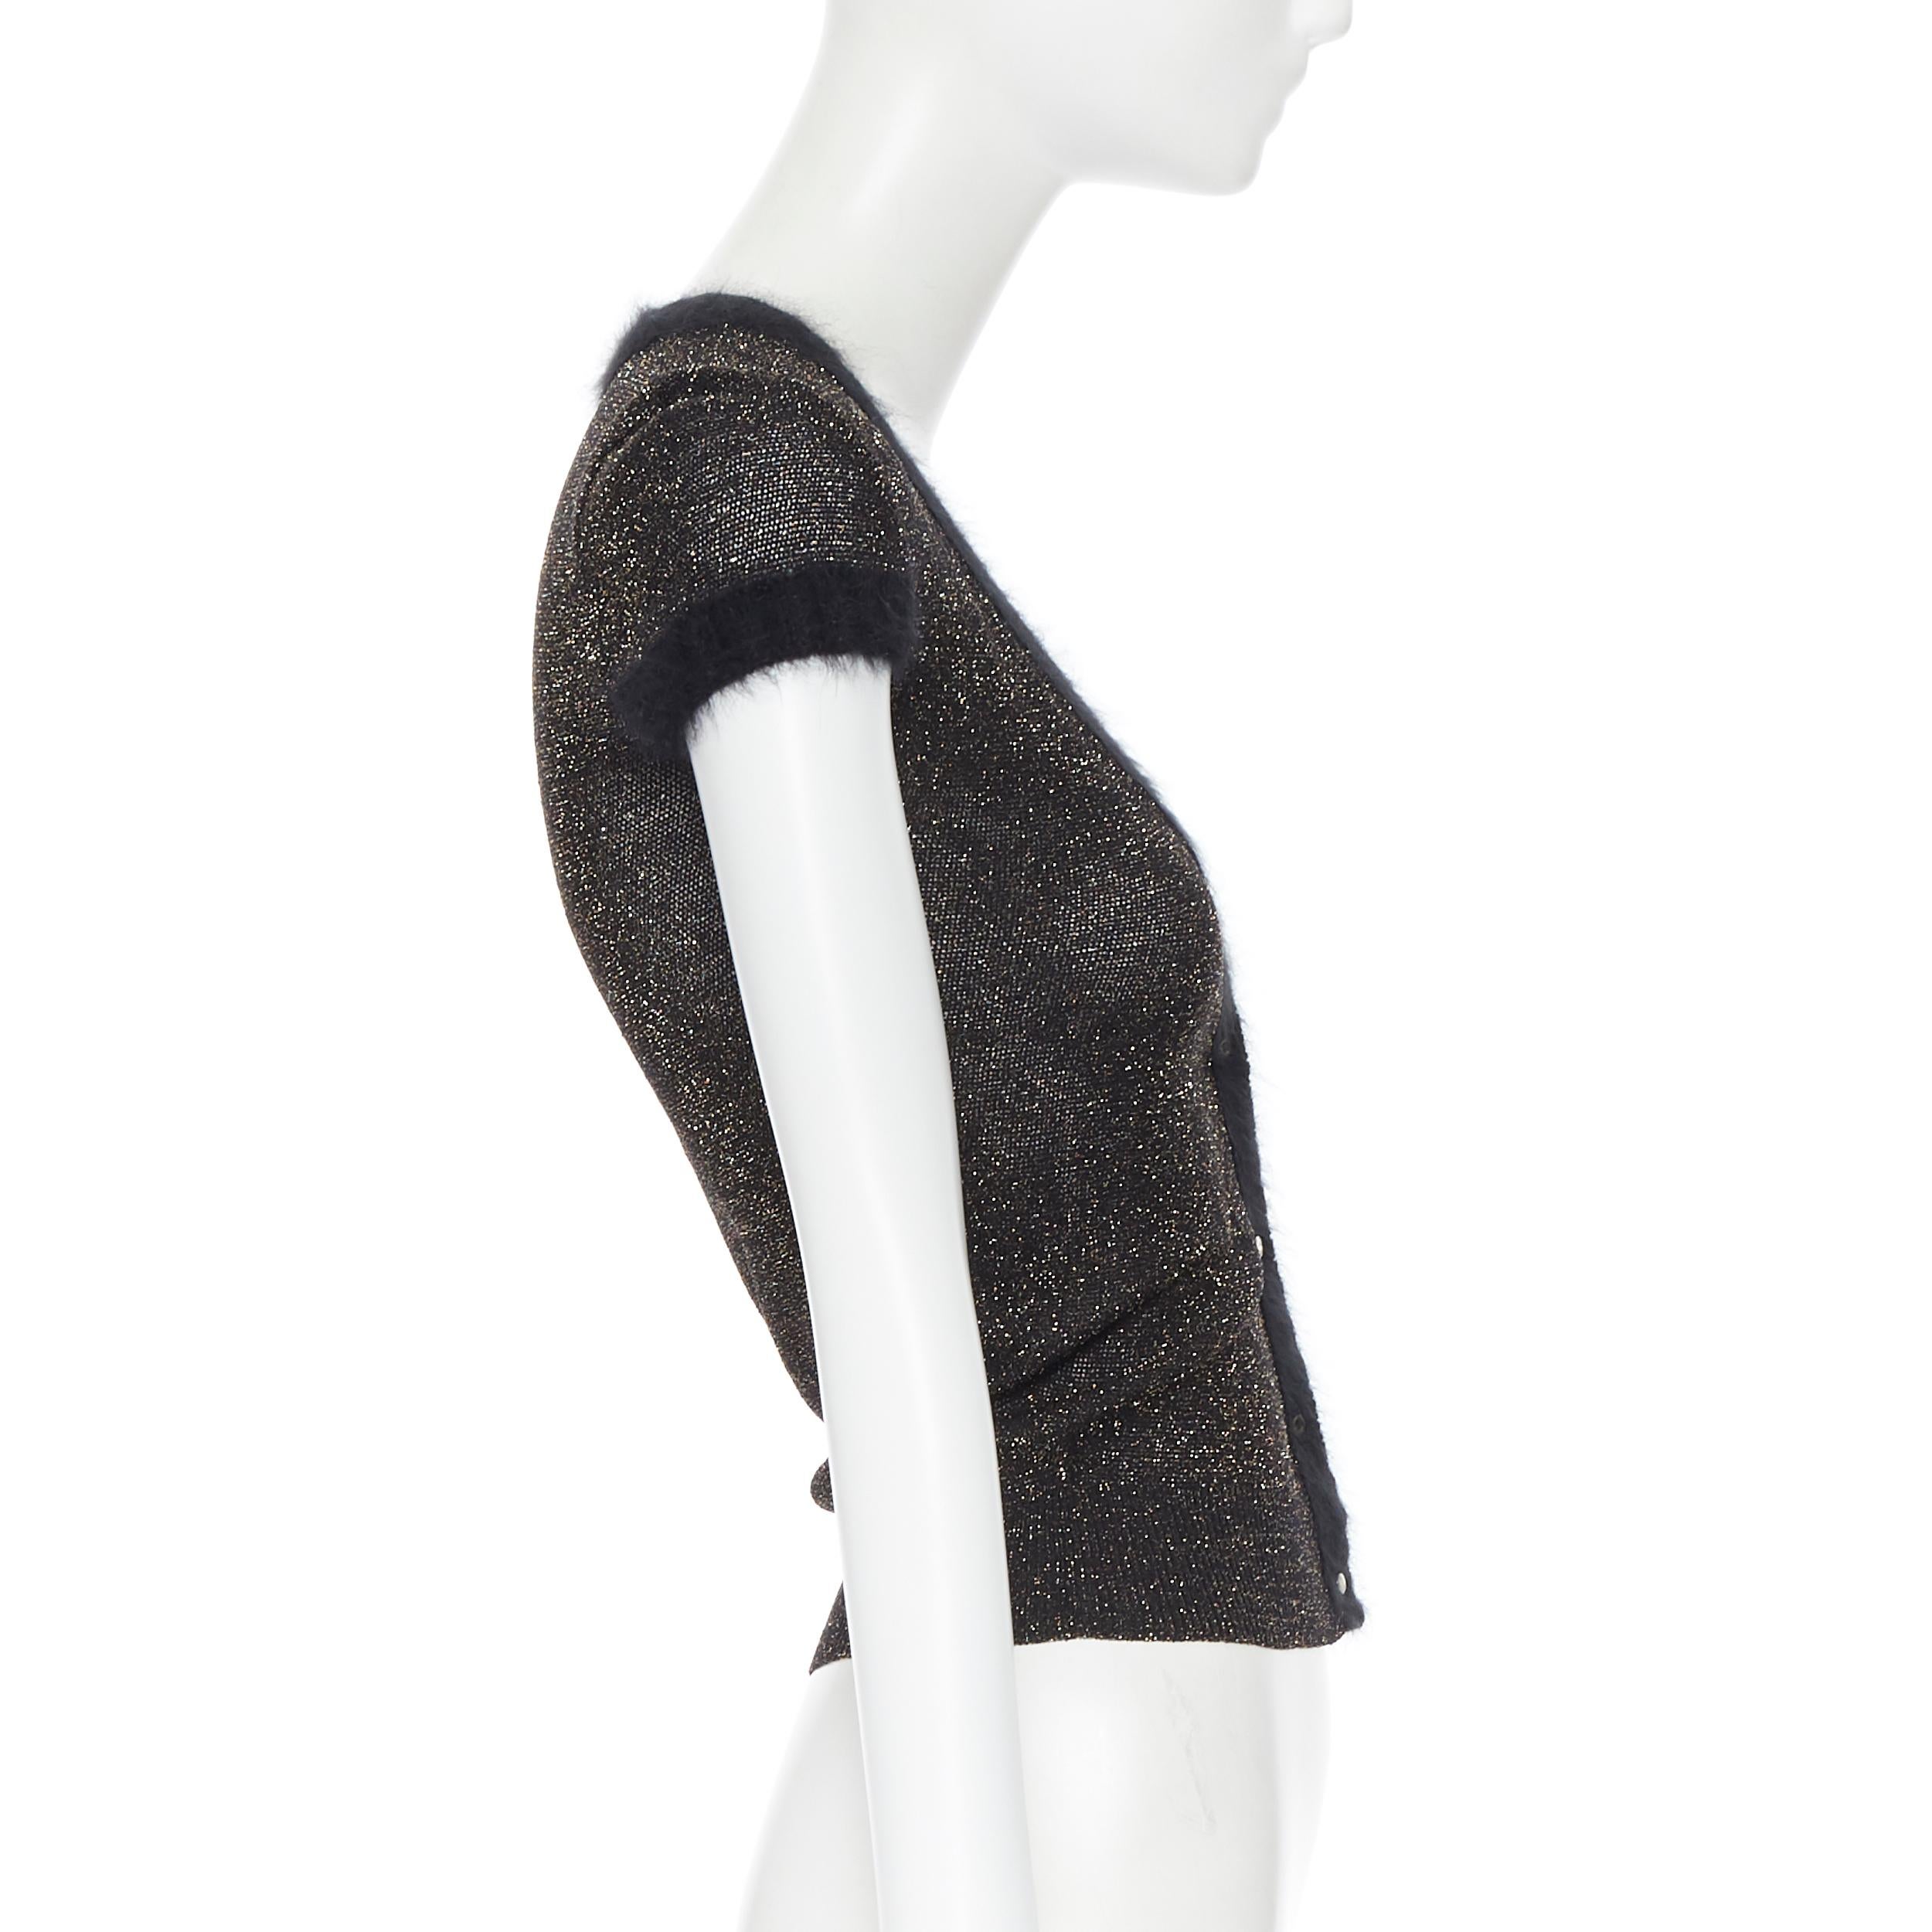 Black GUCCI black gold lurex shimmer alpaca trim cap sleeve cardigan sweater S